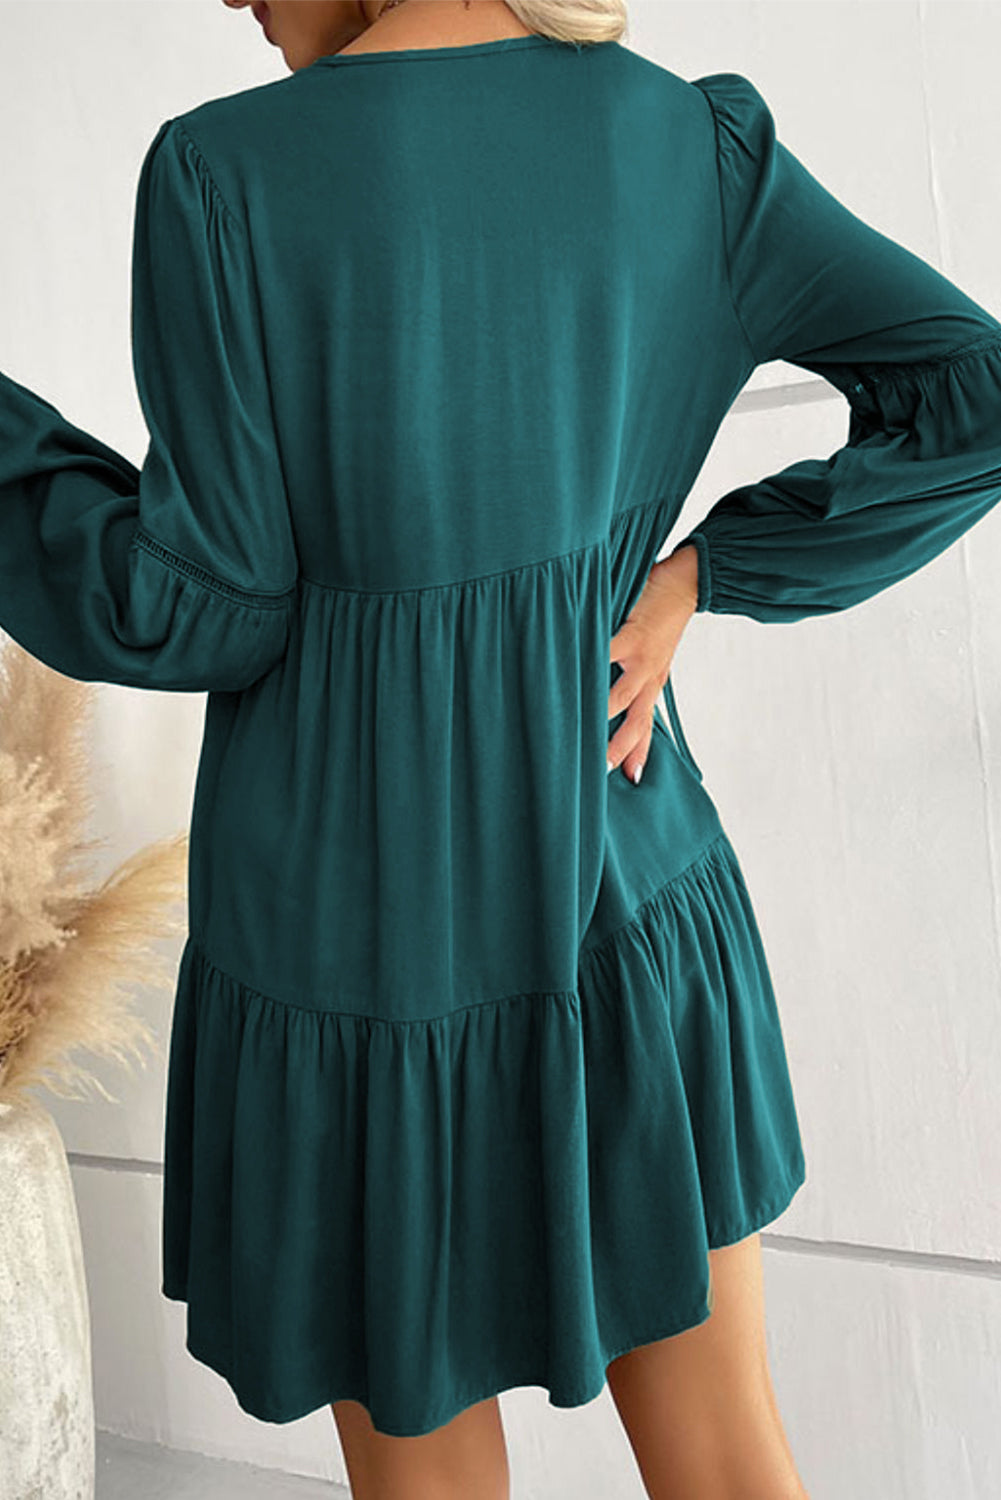 Sea Green Lace Puff Sleeve Buttoned Tiered Ruffled Mini Dress